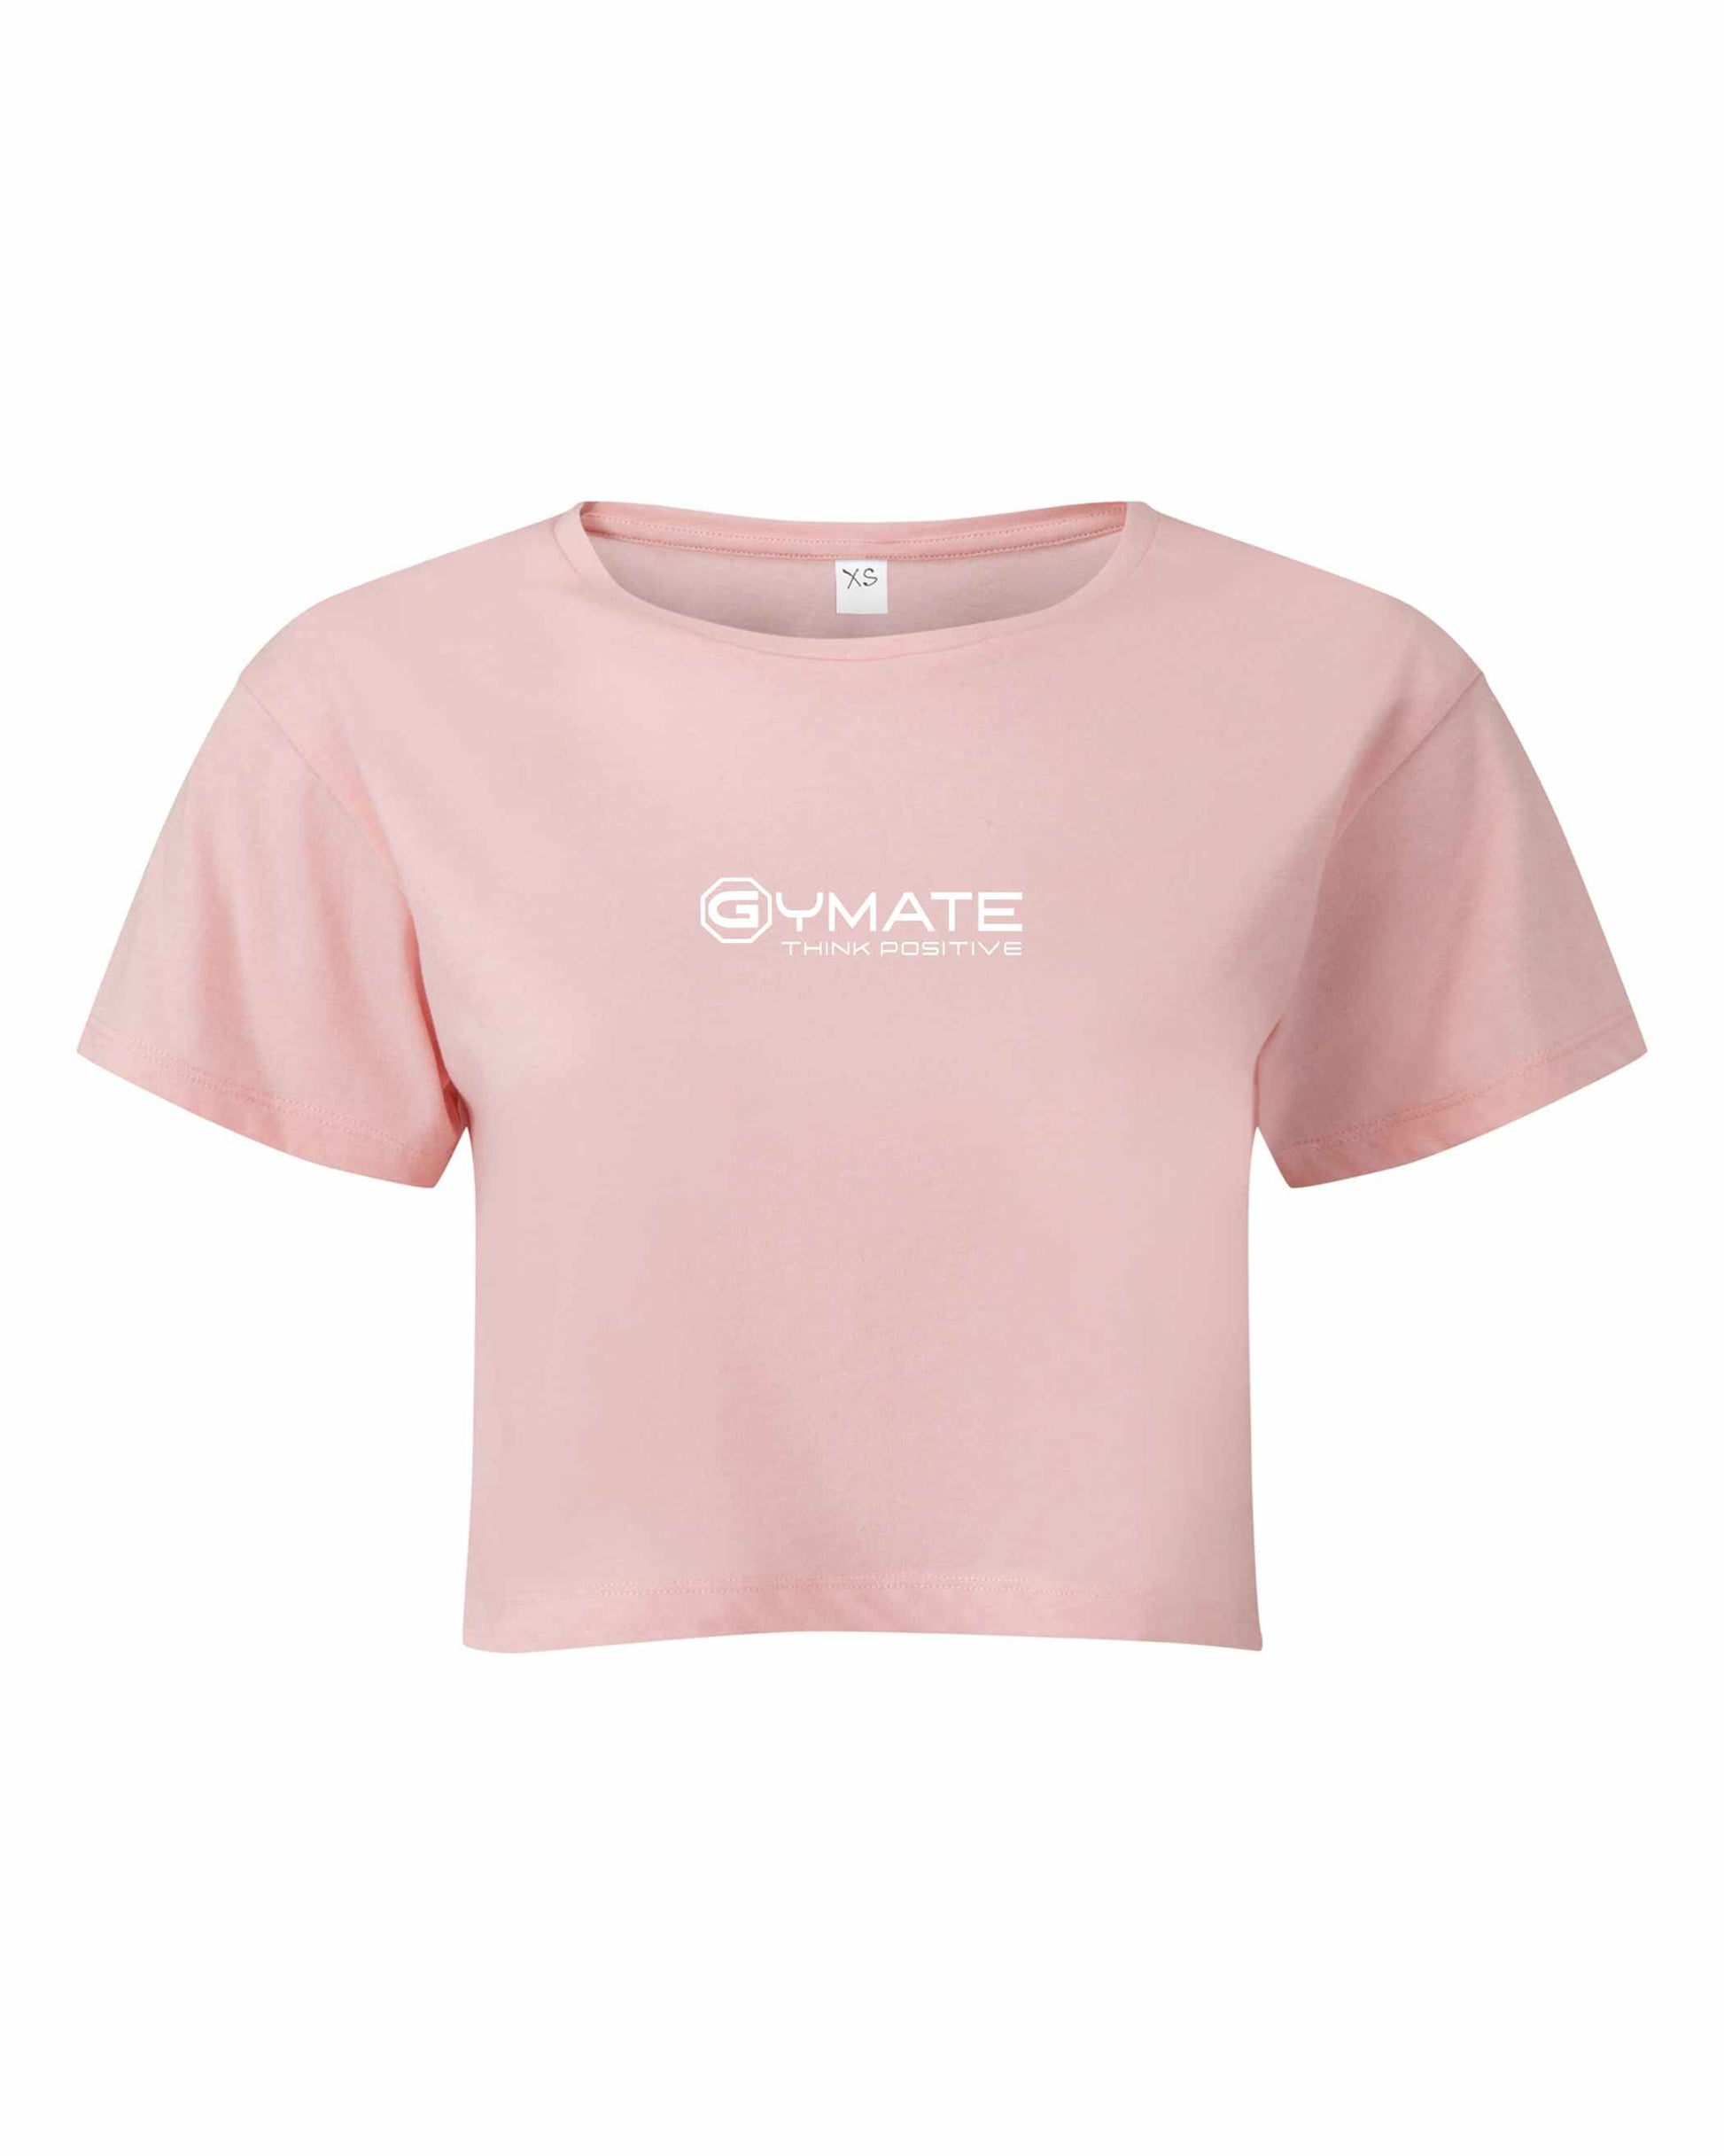 Women's Crop Top Stylish Branded Activewear pink